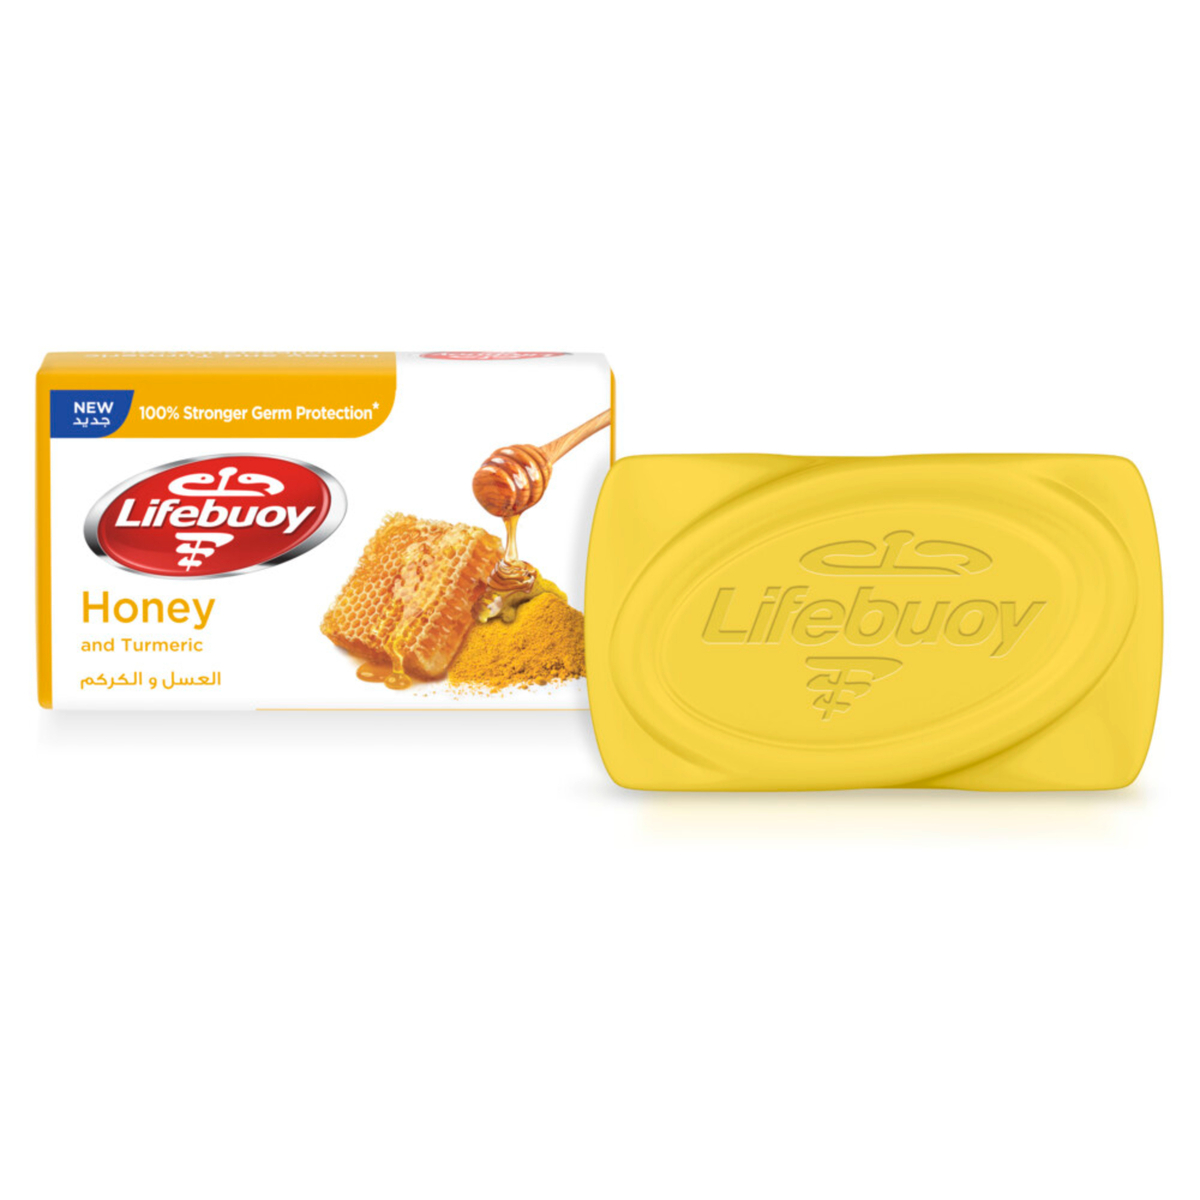 Lifebuoy Bar Soap Honey & Turmeric 125g